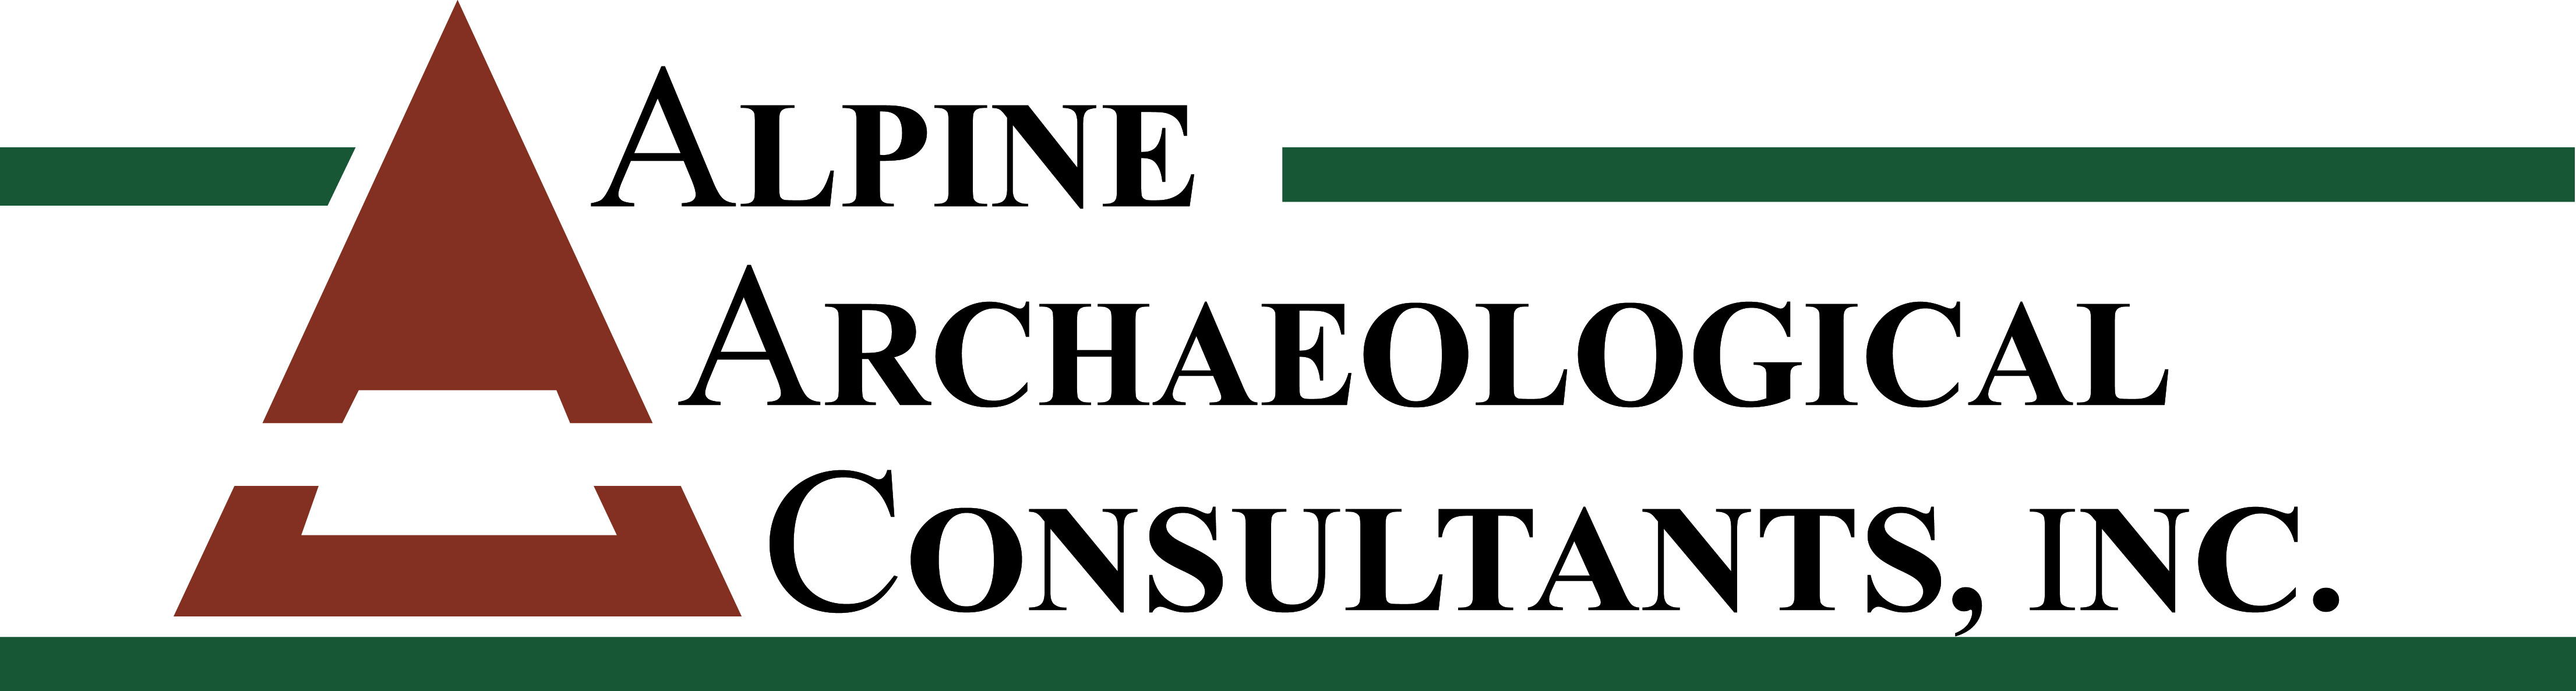 Alpine Archaeological Consultants, Inc.